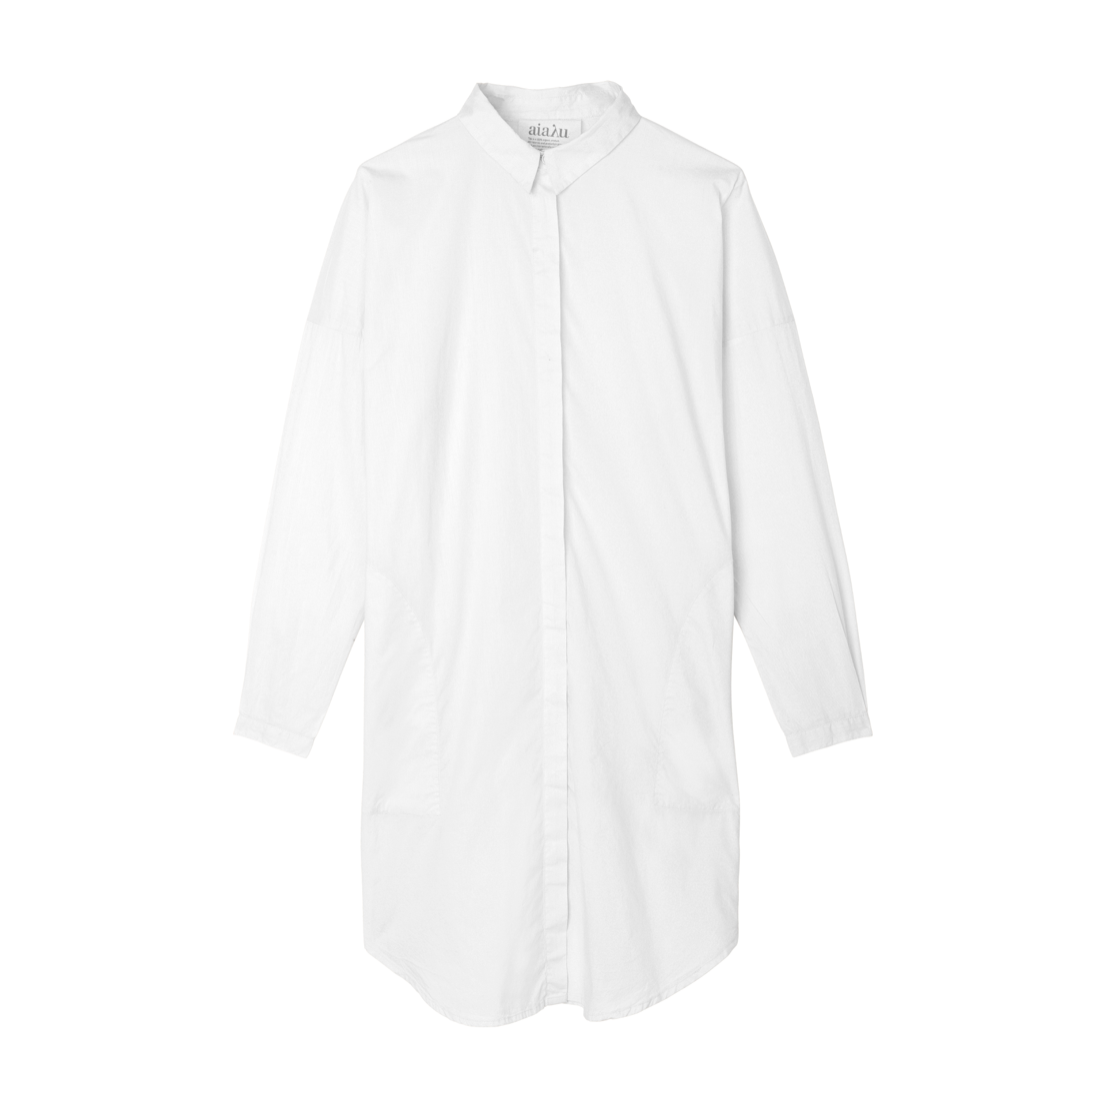 SHIRT DRESS WHITE